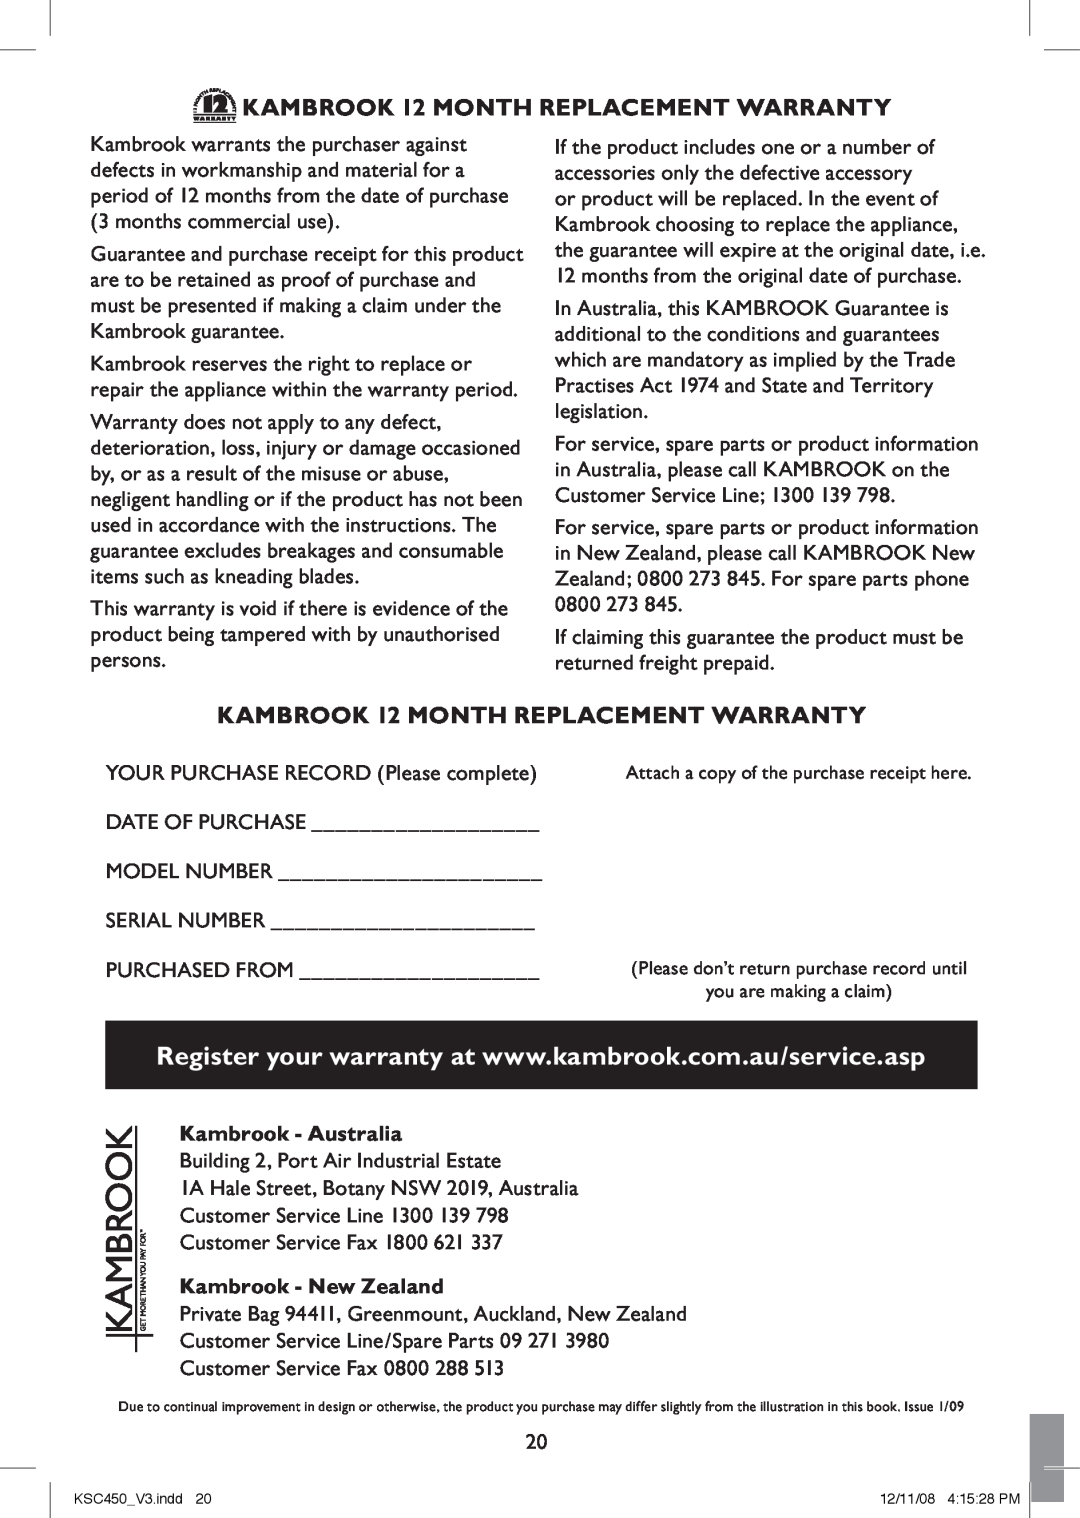 Kambrook KSC450 manual KAMBROOK 12 MONTH REPLACEMENT WARRANTY, Kambrook - Australia, Kambrook - New Zealand 